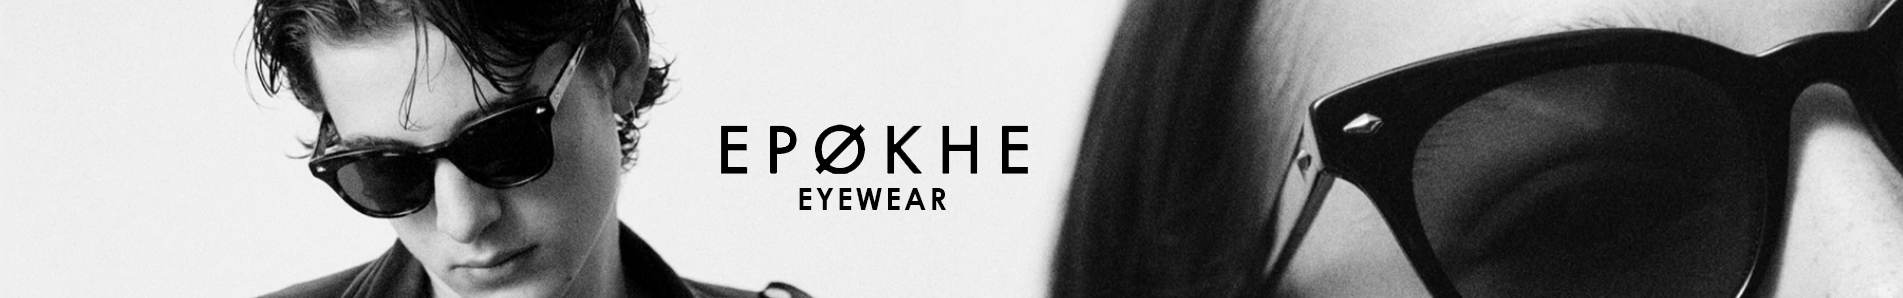 Epokhe Eyewear